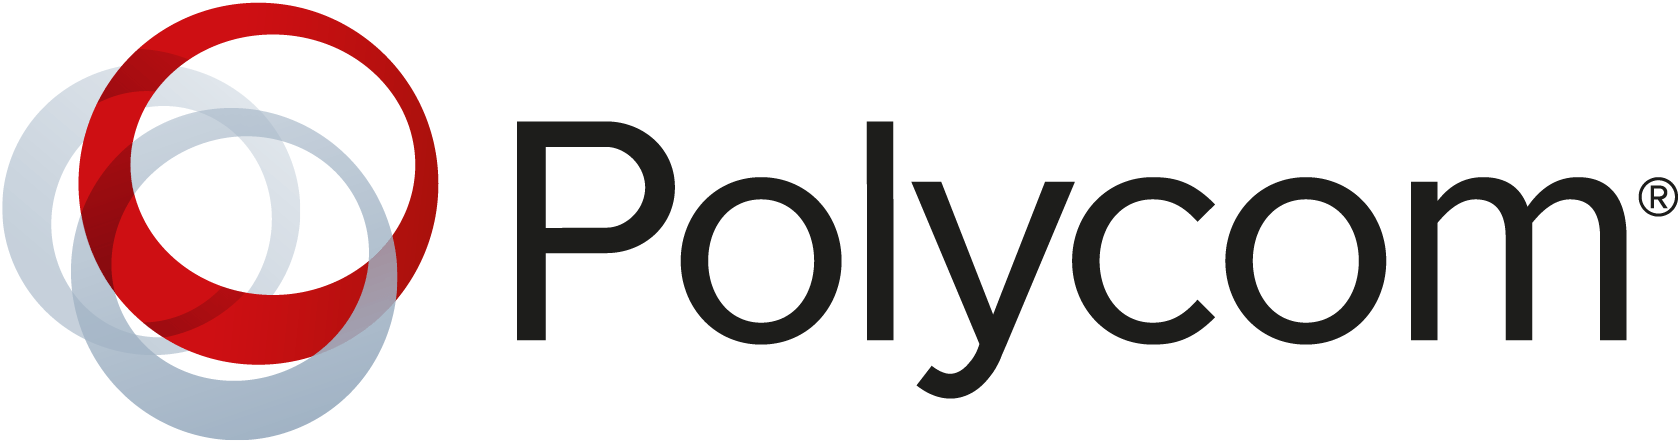 Polycom Logo png